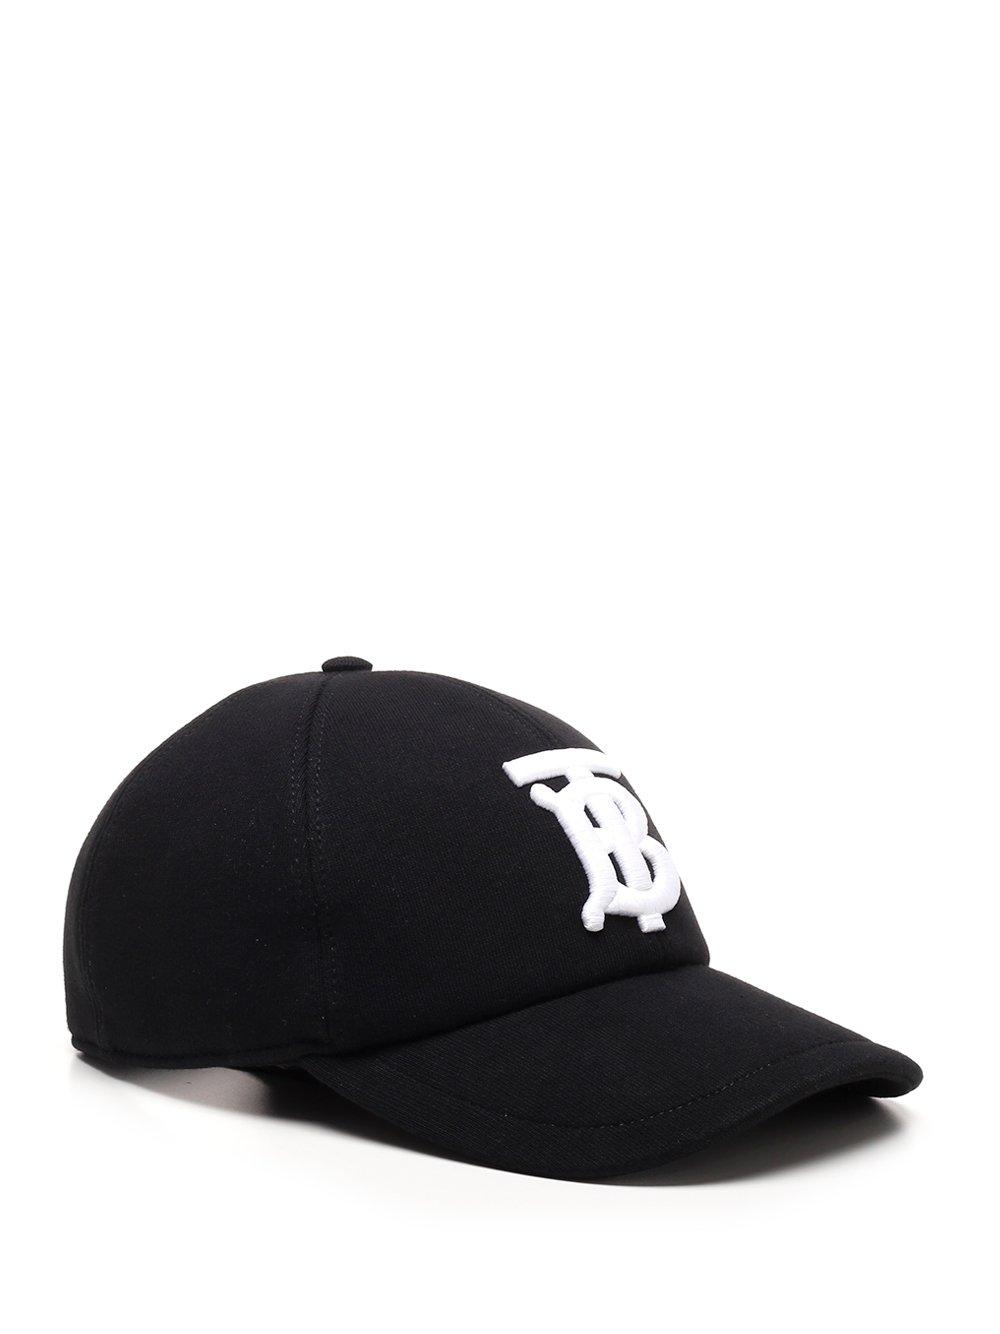 Burberry Cotton Tb Monogram Baseball Cap in Black,White (Black) - Save 48%  | Lyst